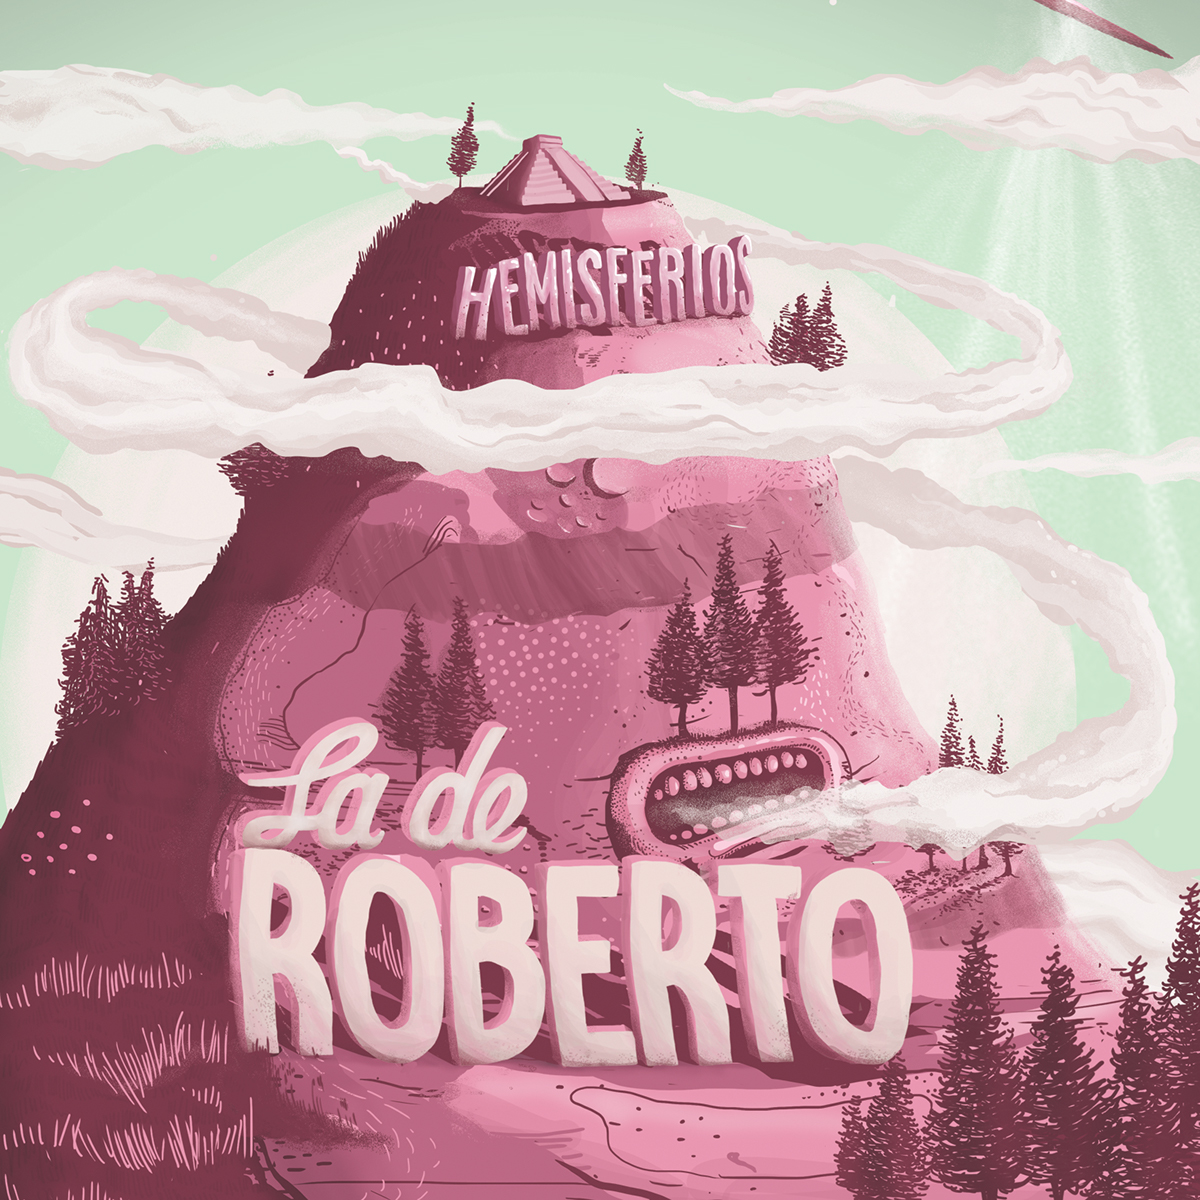 LDR ternura hemisferios paraguay asuncion animacion motion graphics personajes lucas we Roberto asuncionvideo clip